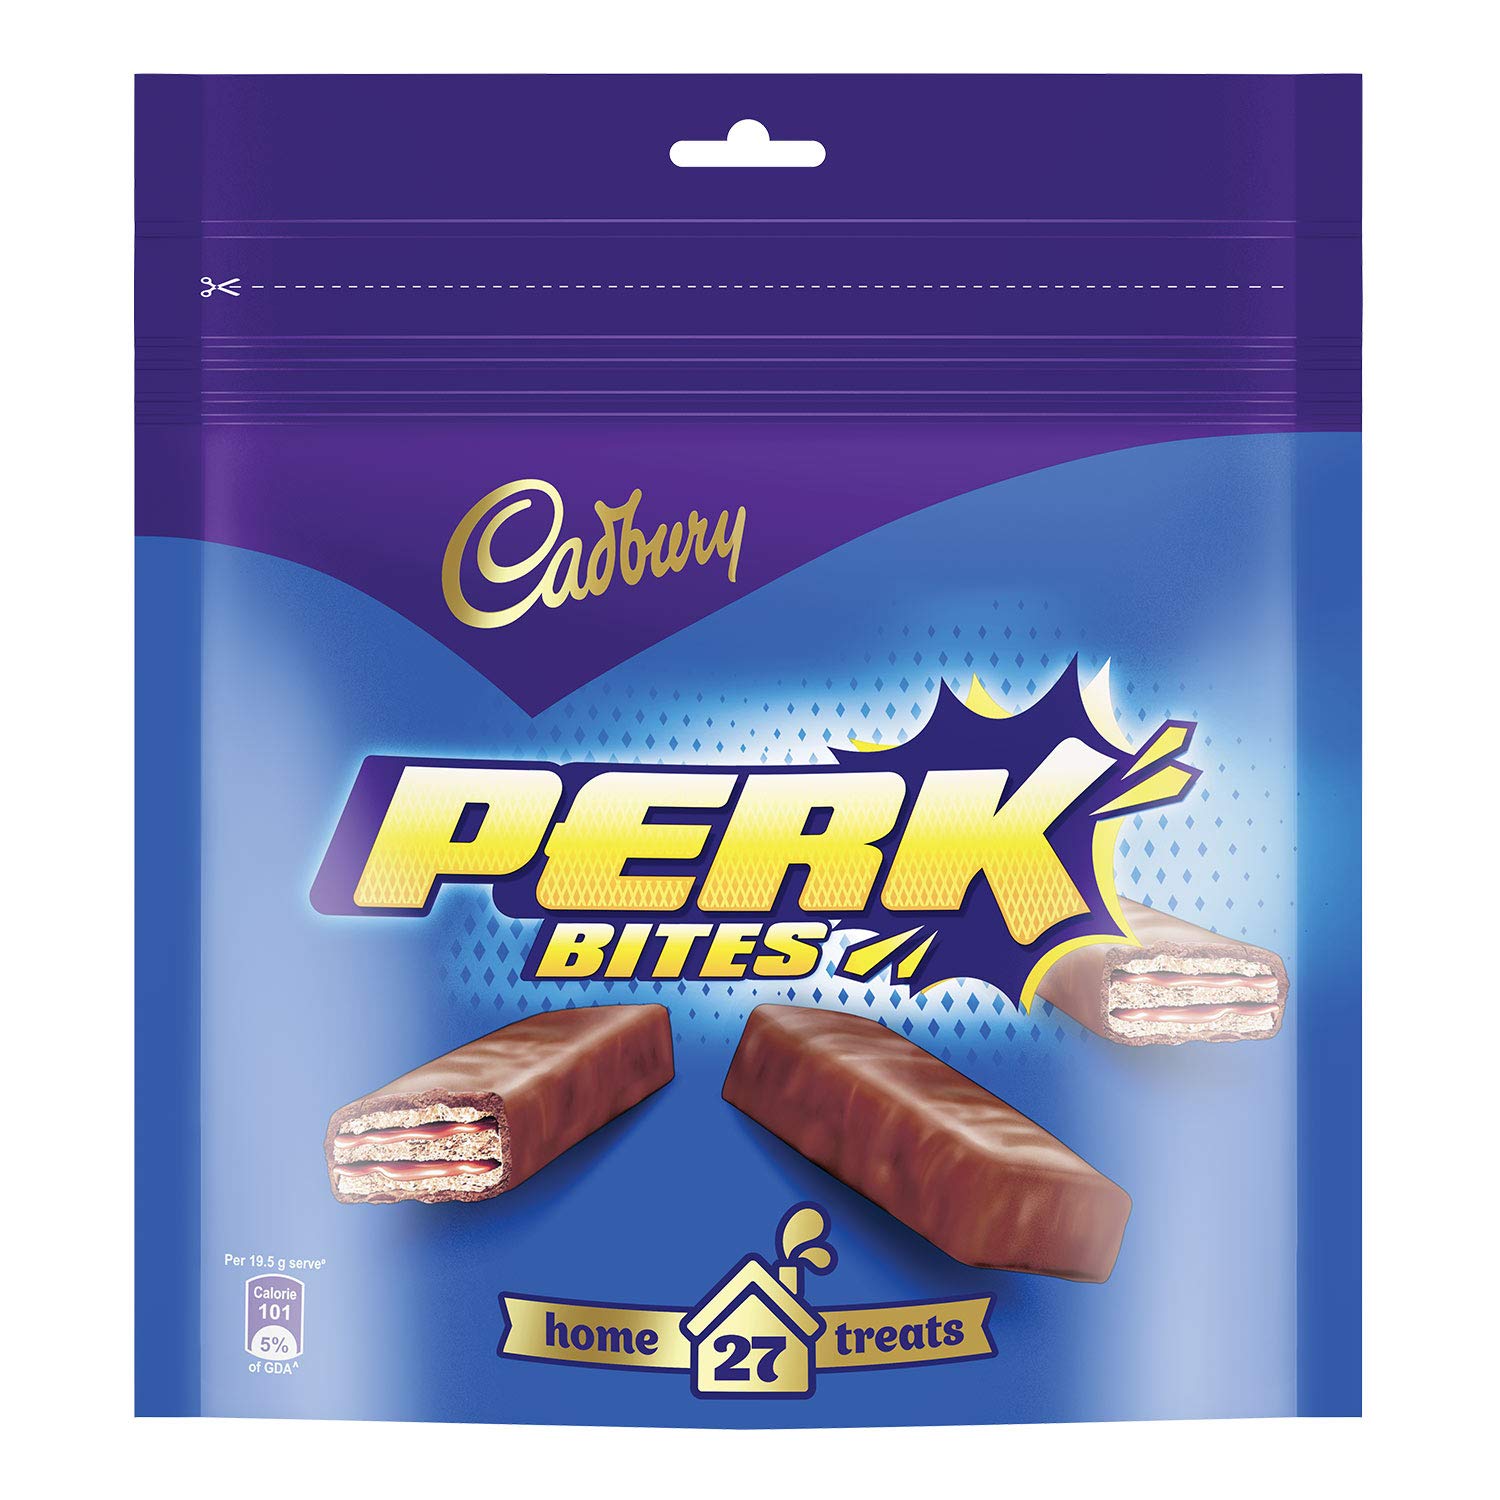 Cadbury Perk Bites Milk Chocolate Bar